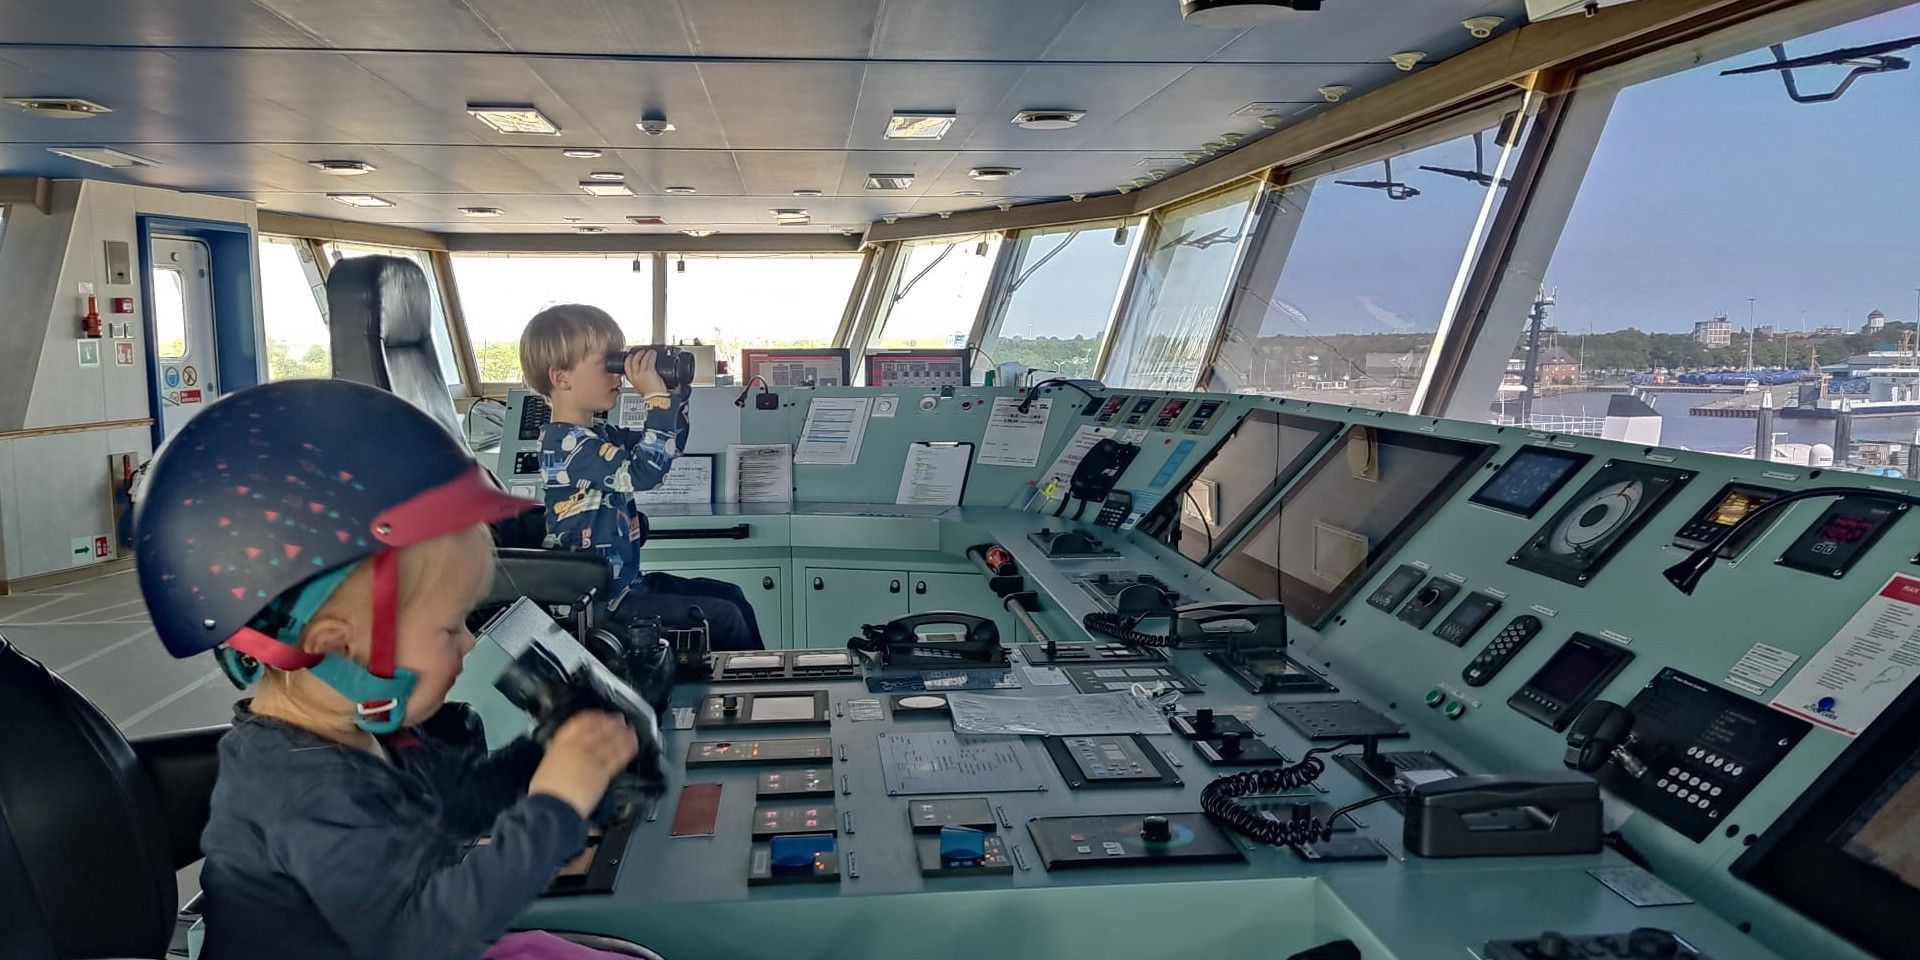 Future generations of seafarers